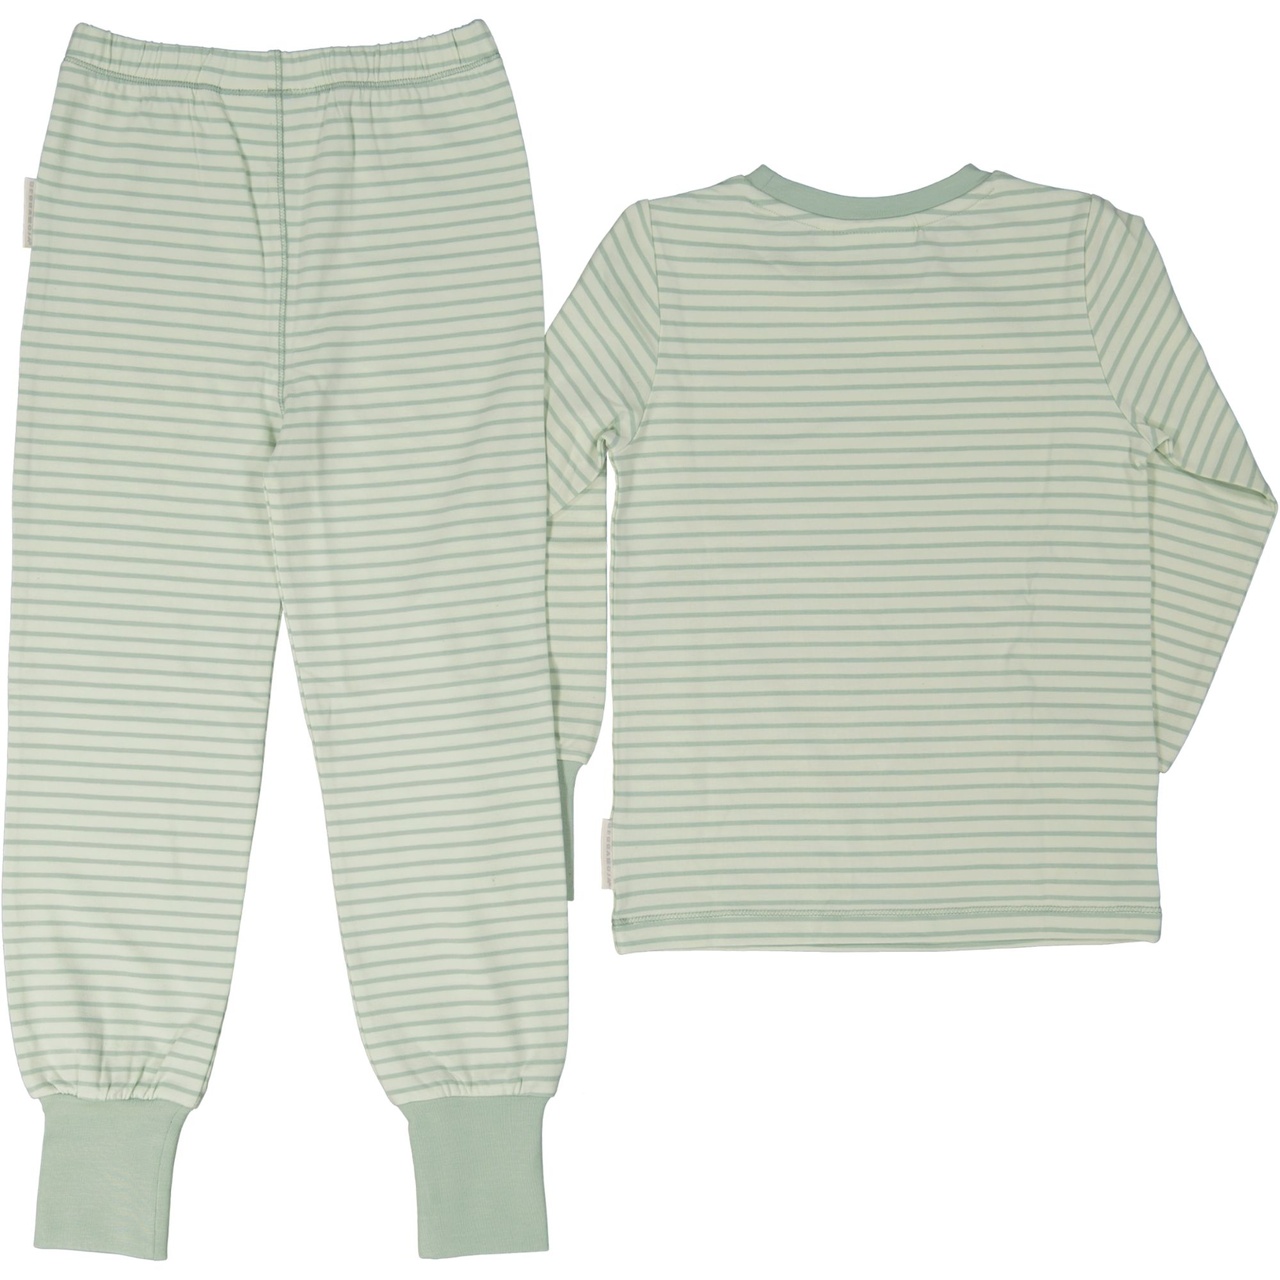 Two pcs pyjamas Classic L.green/green  110/116